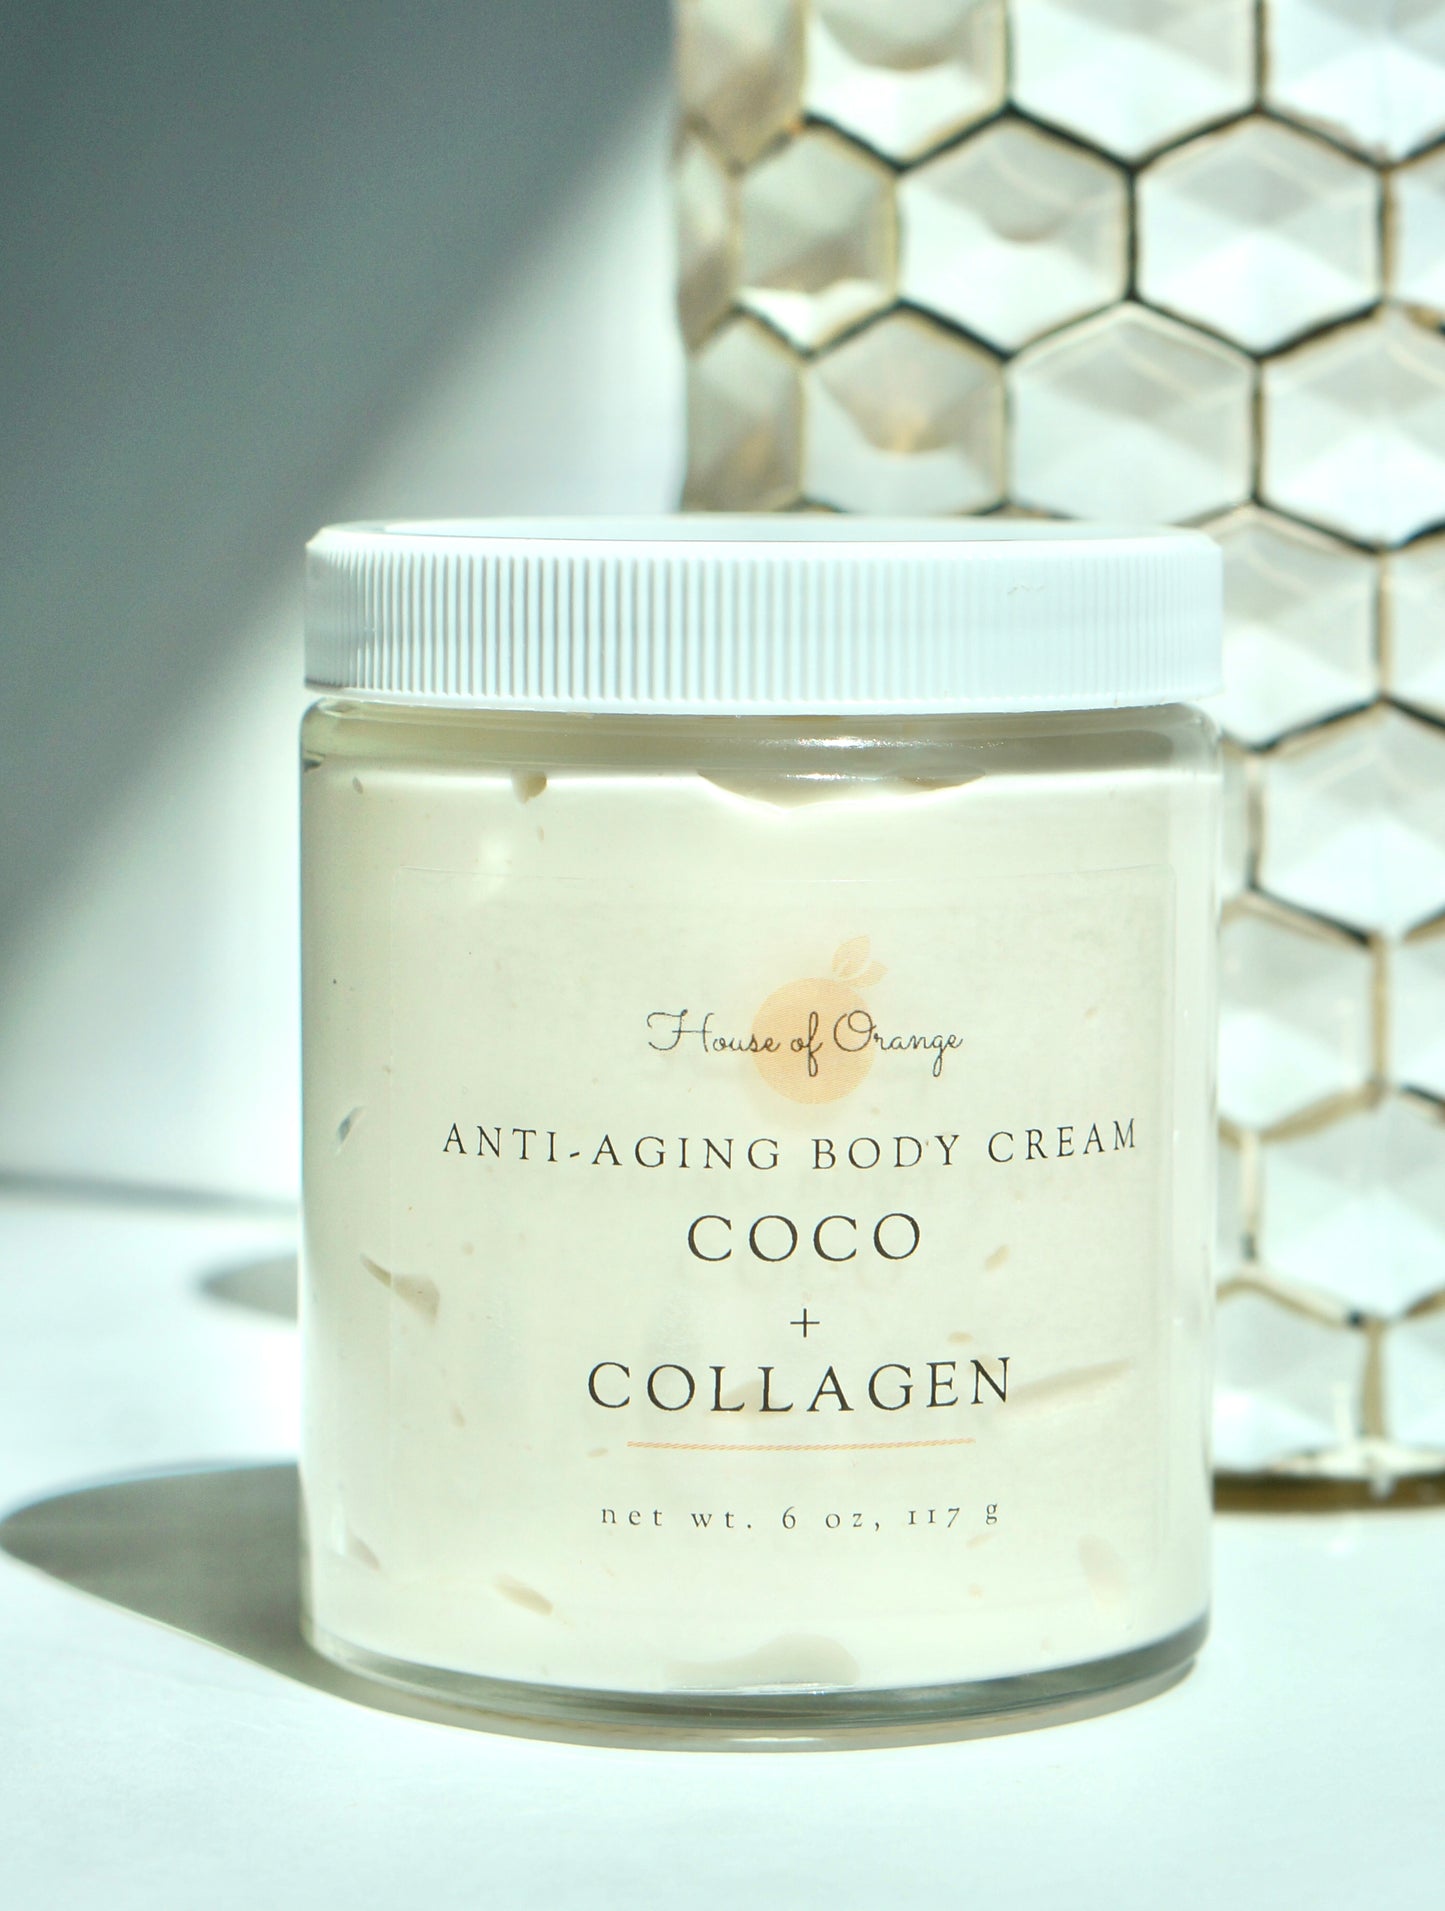 Coco Collagen Anti-Aging Body Cream